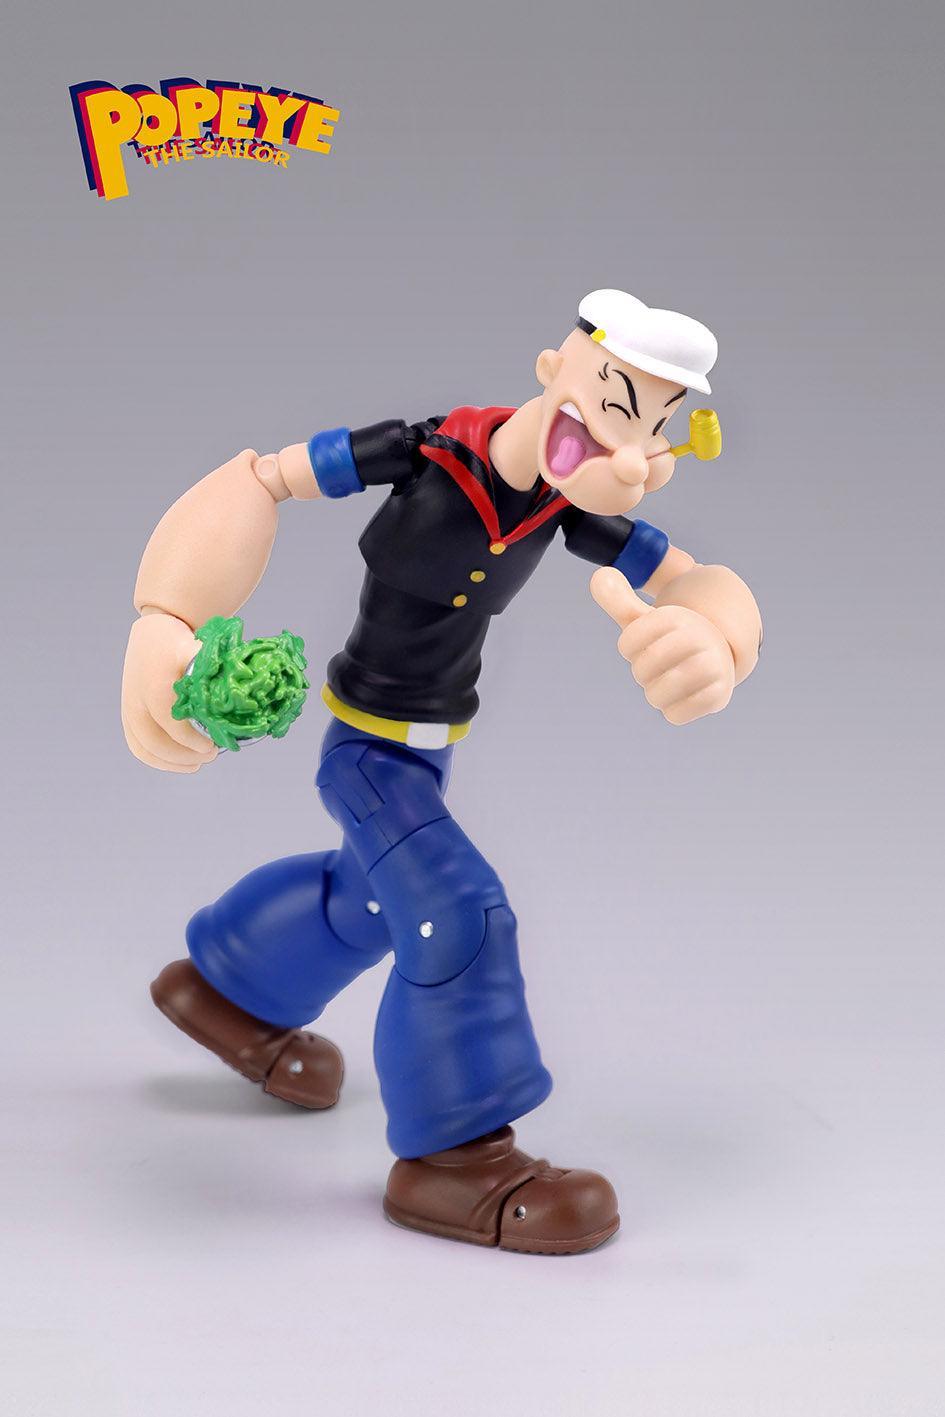 Dasin - 1:12 Popeye the Sailor Action Figure